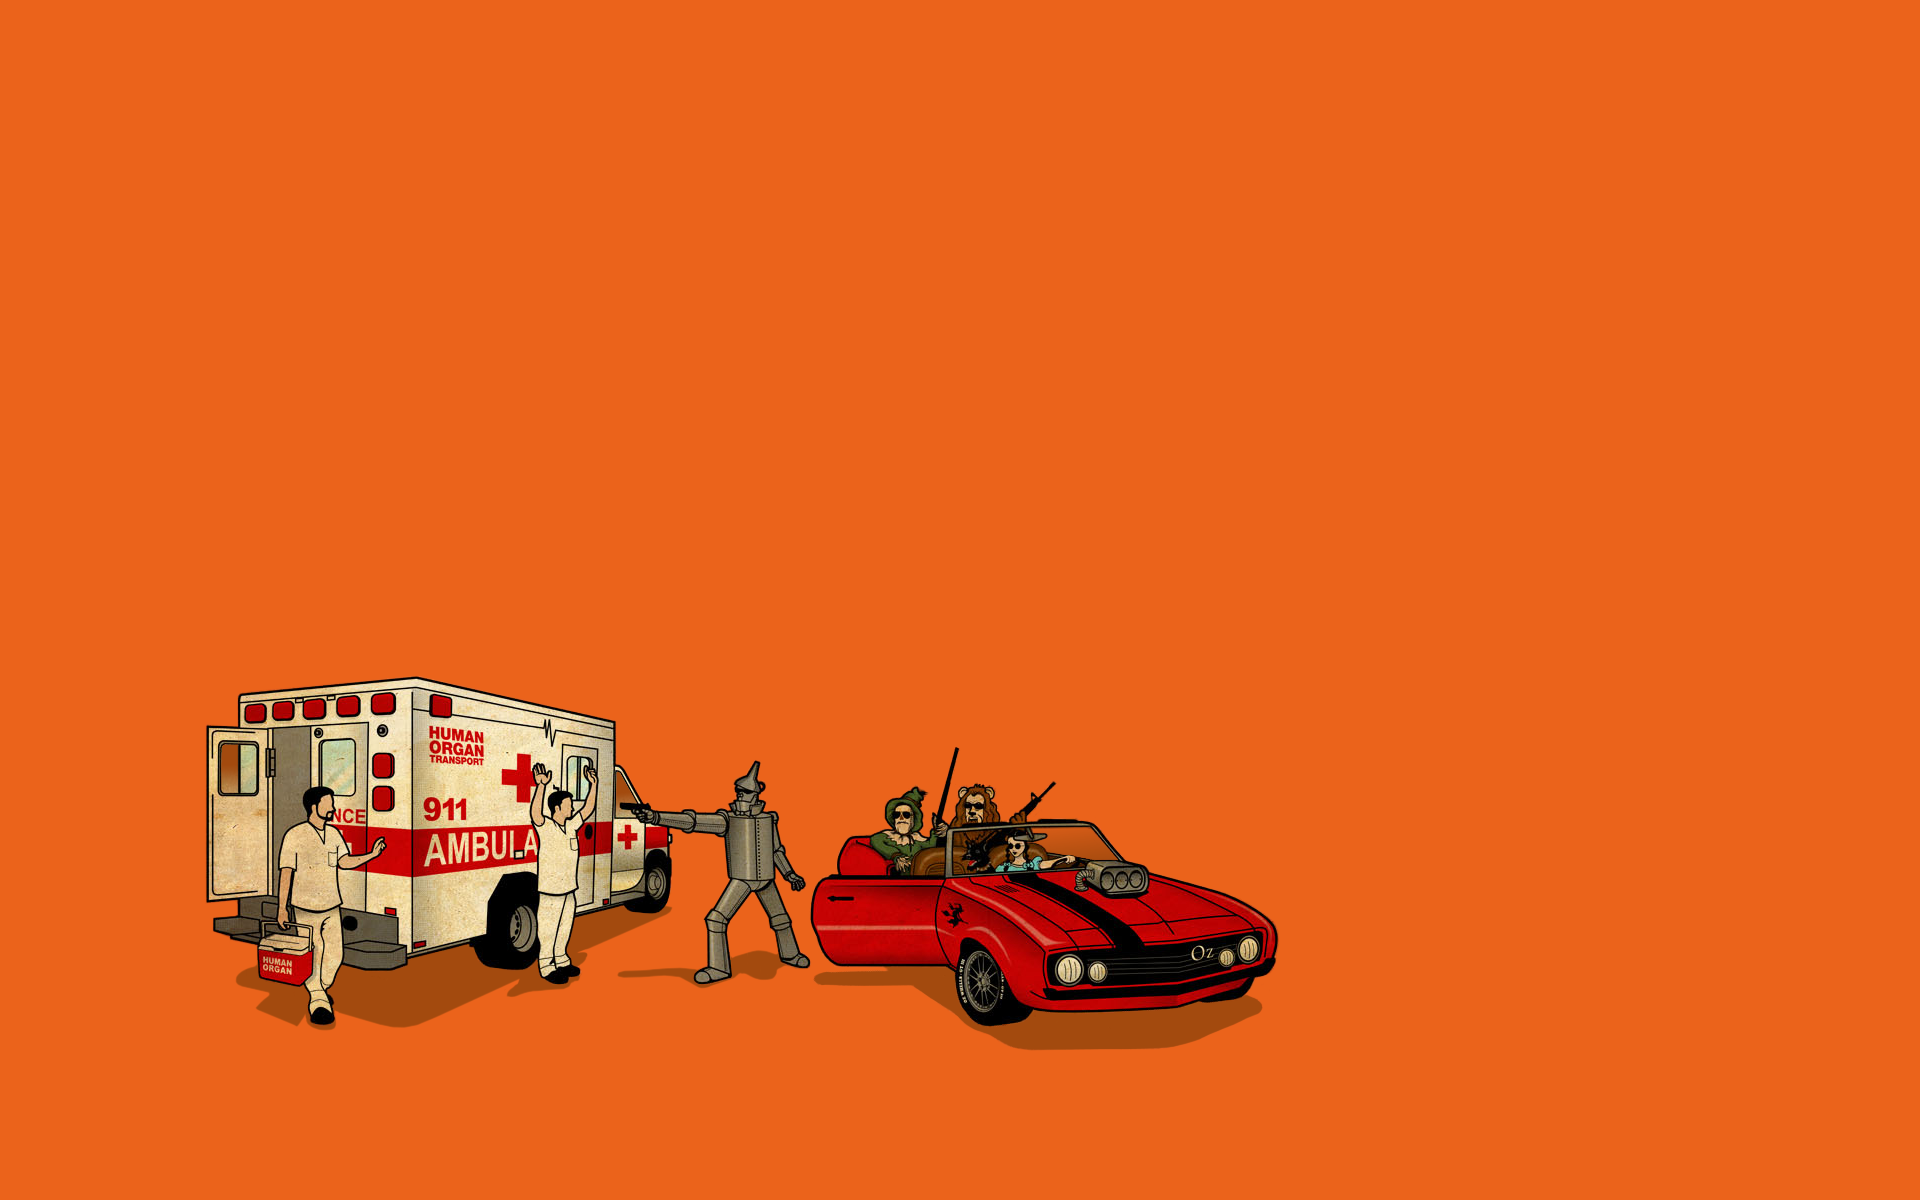 General 1920x1200 The Wizard of Oz minimalism humor car vehicle numbers orange background simple background ambulances medicine sports car